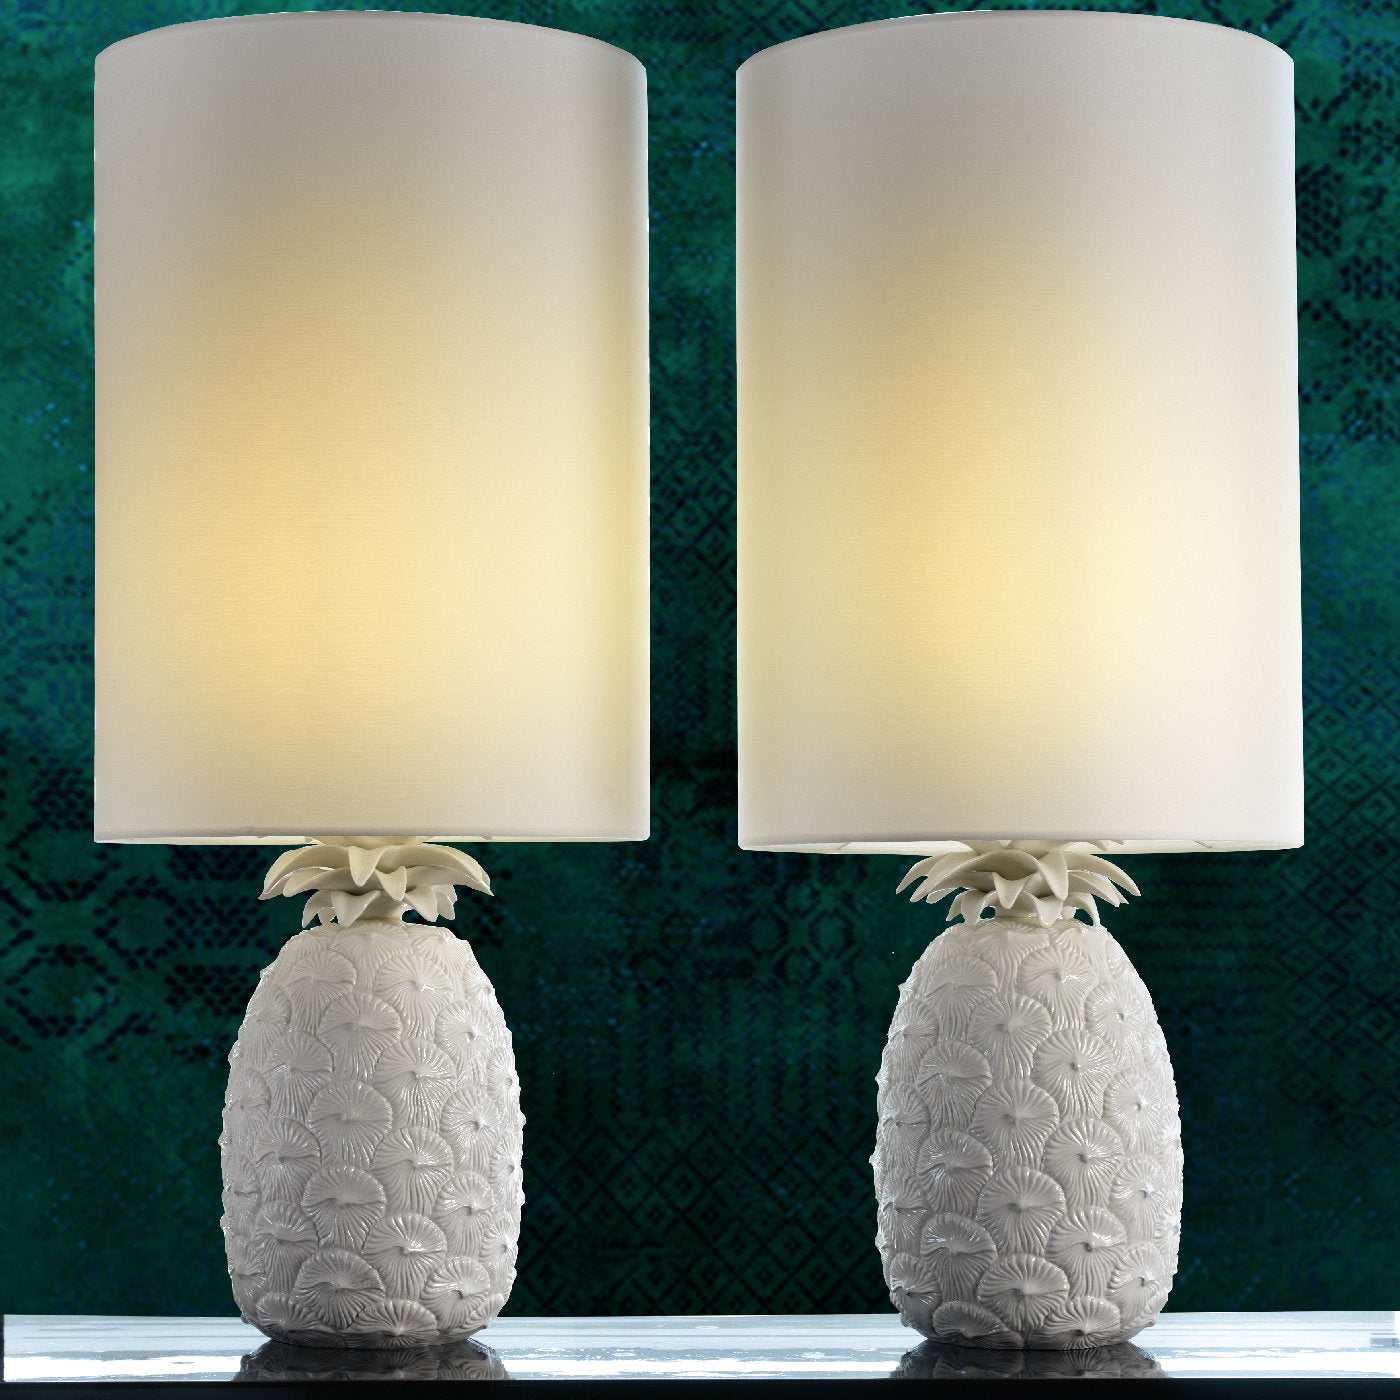 Pineapple Big Table Lamp - Alternative view 1